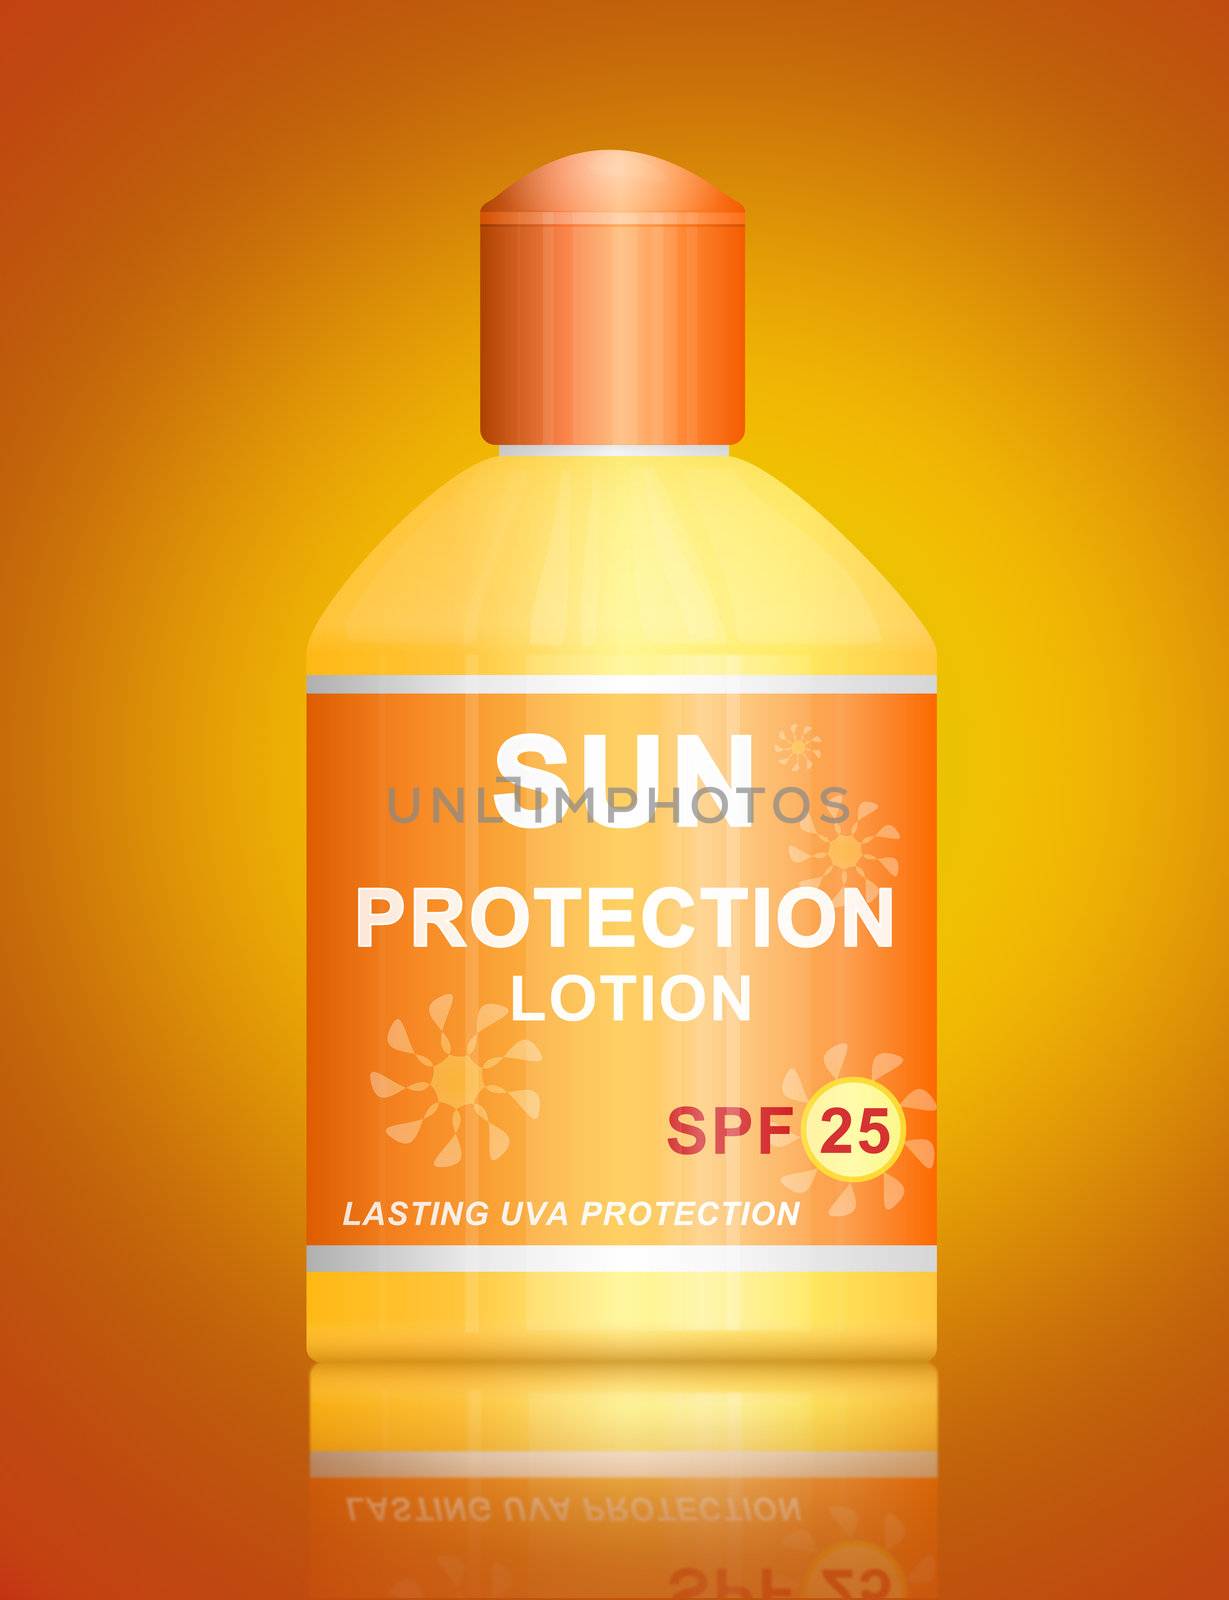 Illustration depicting a single uva SPF 25 sun protection lotion bottle arranged over vibrant golden background.